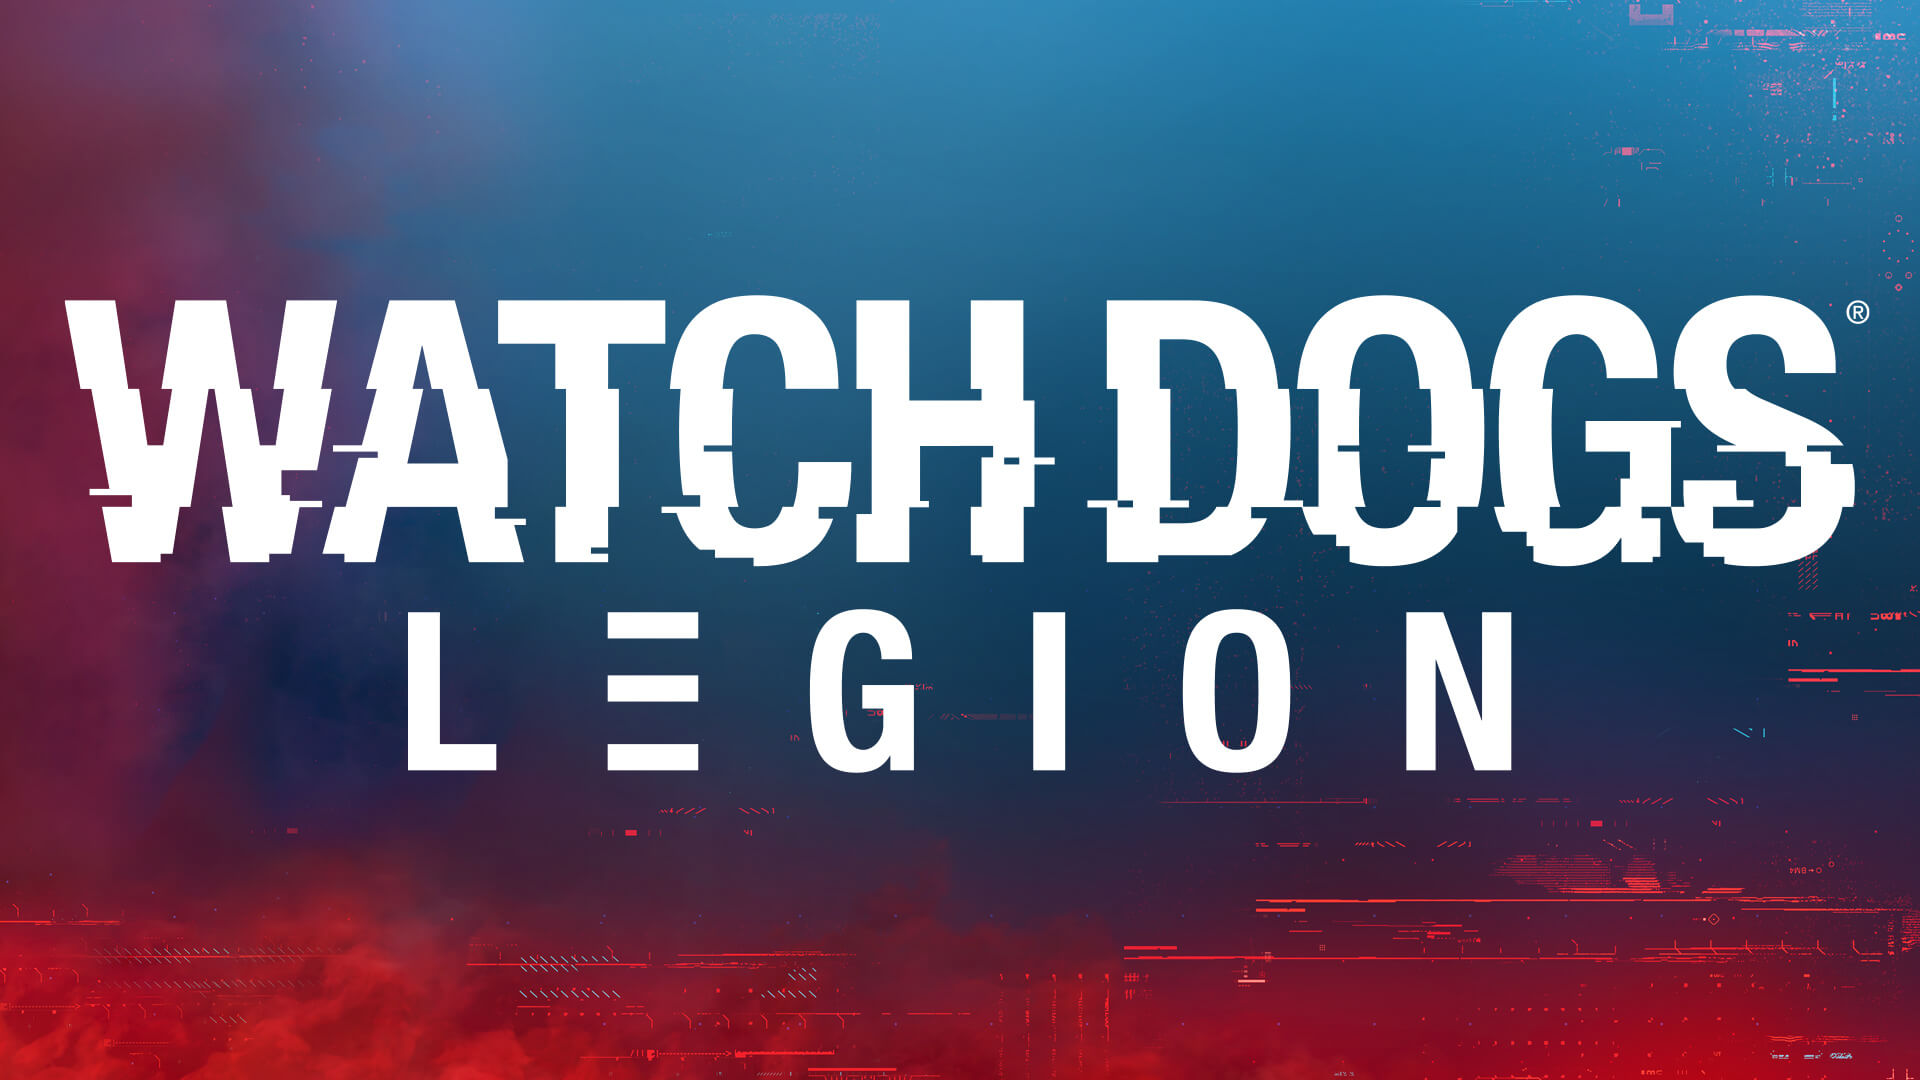   Watch Dogs Legion